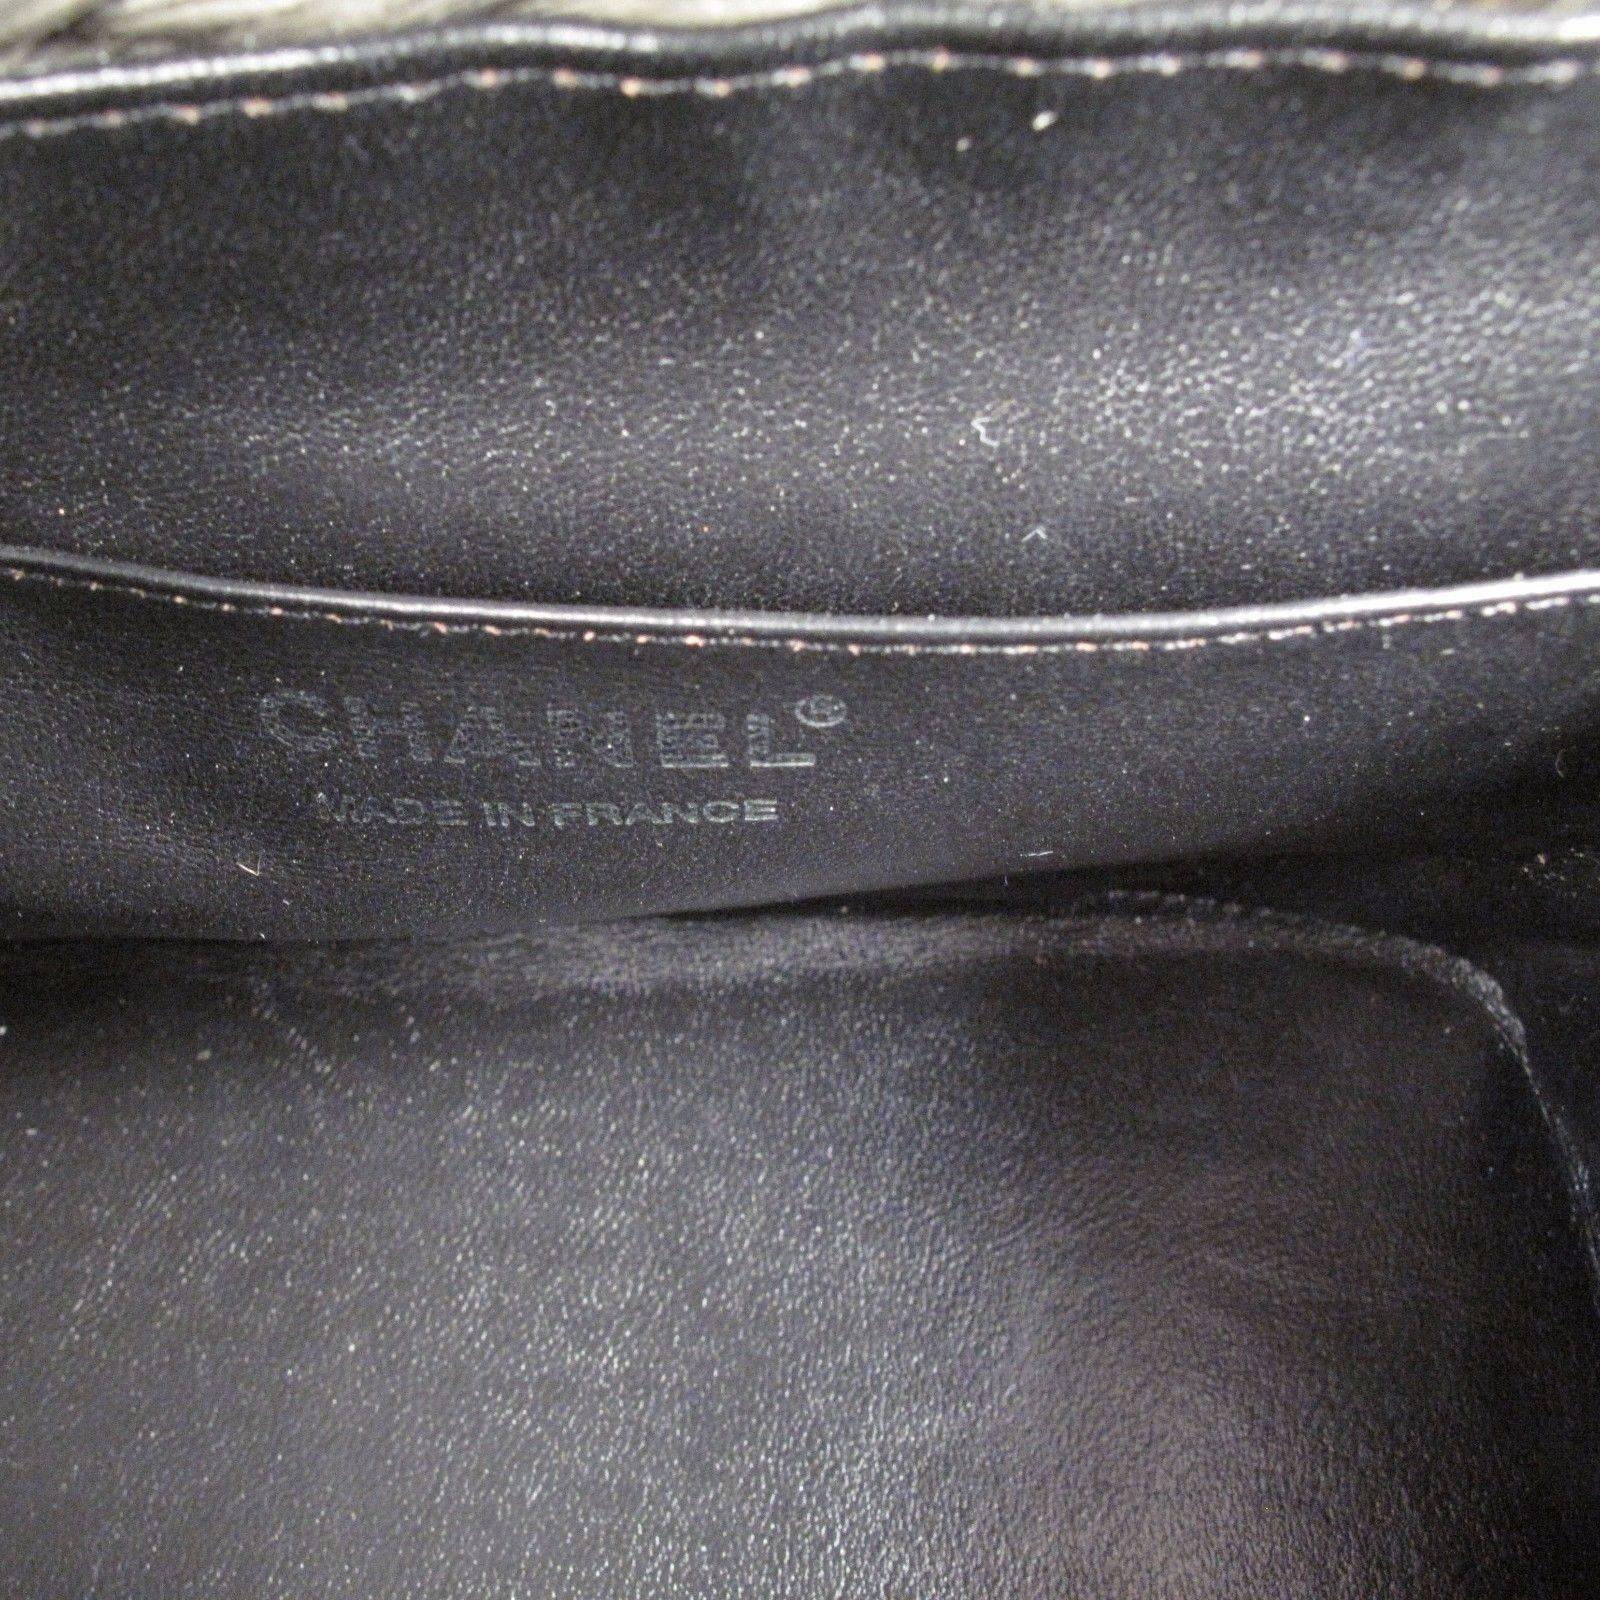 Chanel Straw Bag - Rare Basket Woven Raffia Tote Bag Gray Tan Black Leather CC 3